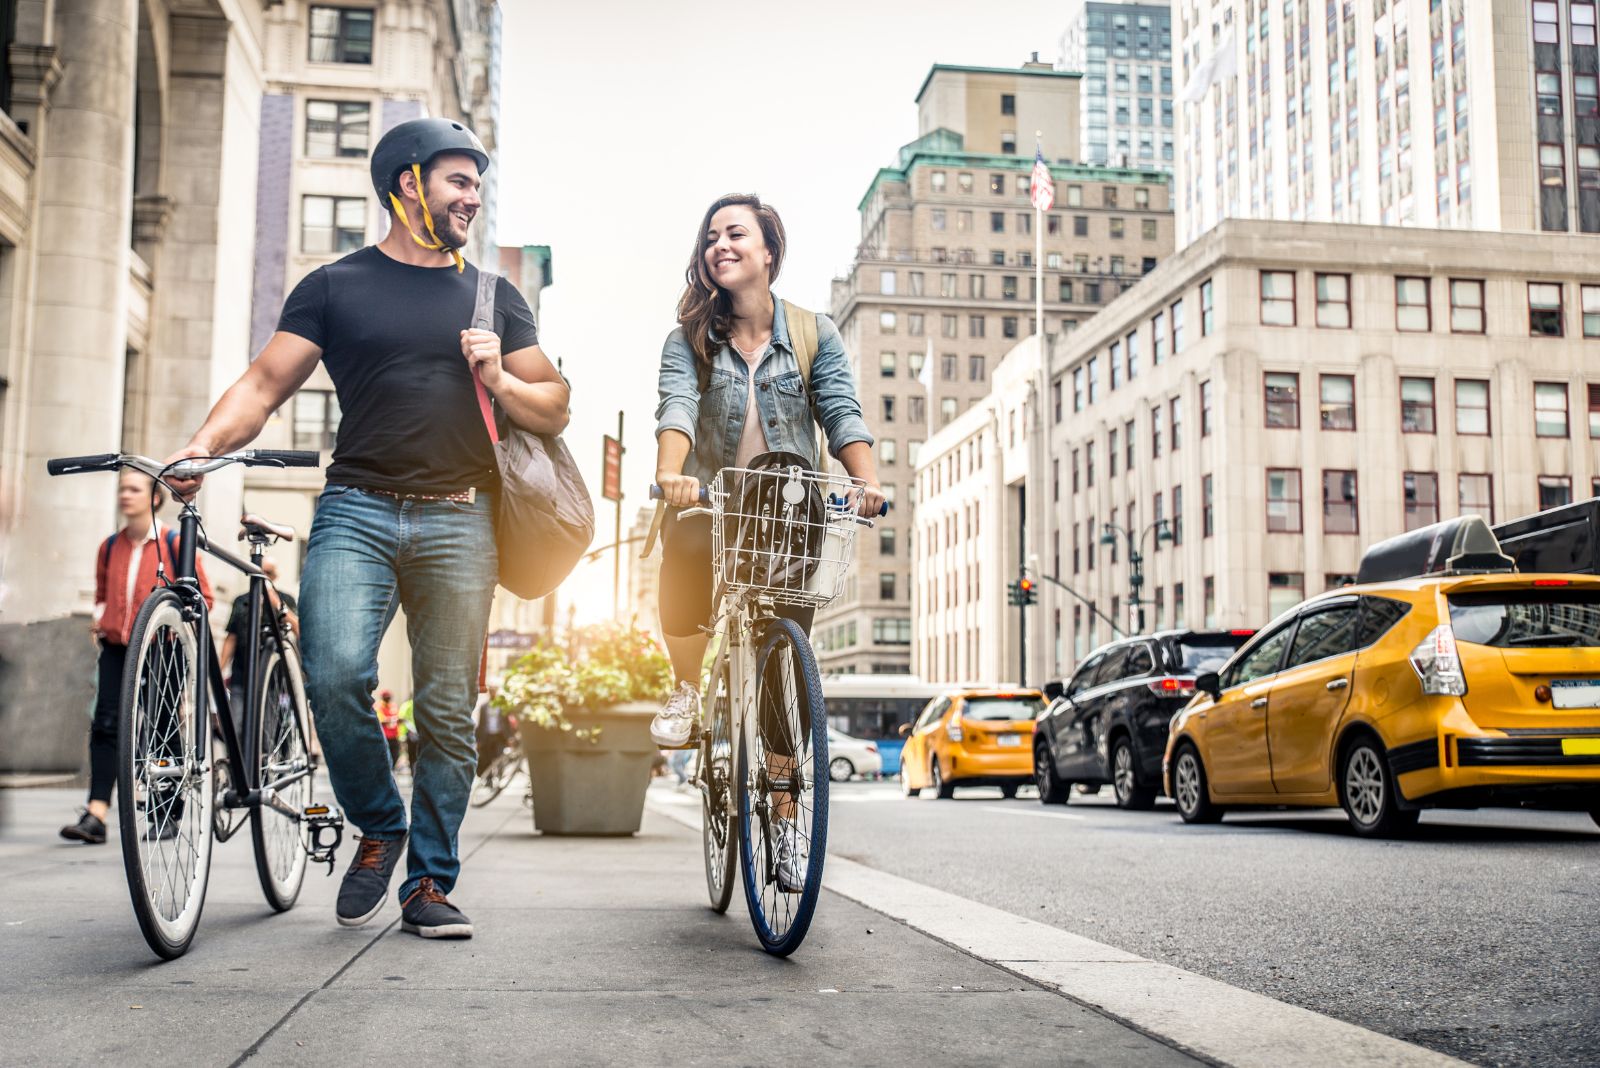 Life gives us the people. Прогулка на велосипеде в городе. Велосипед в городе. Велосипедист в городе. Люди на велосипедах в городе.